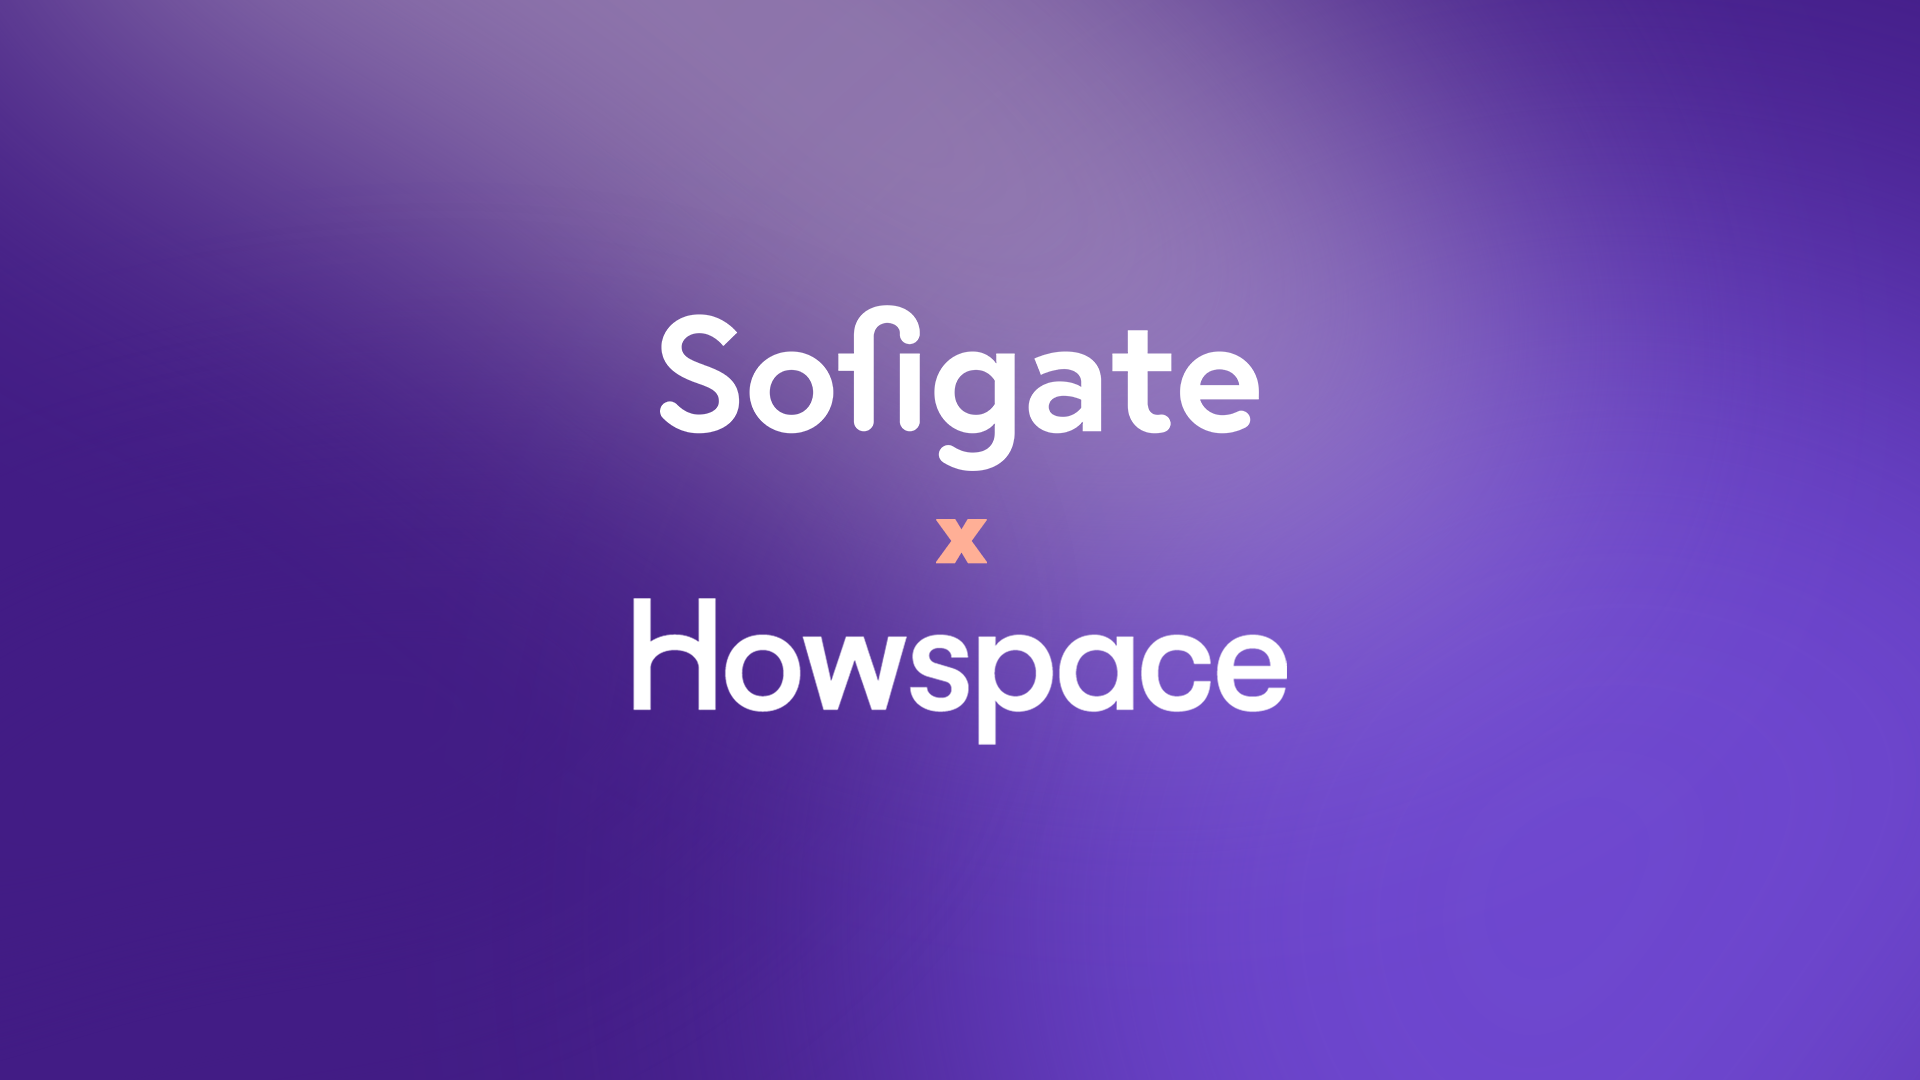 Sofigate x Howspace